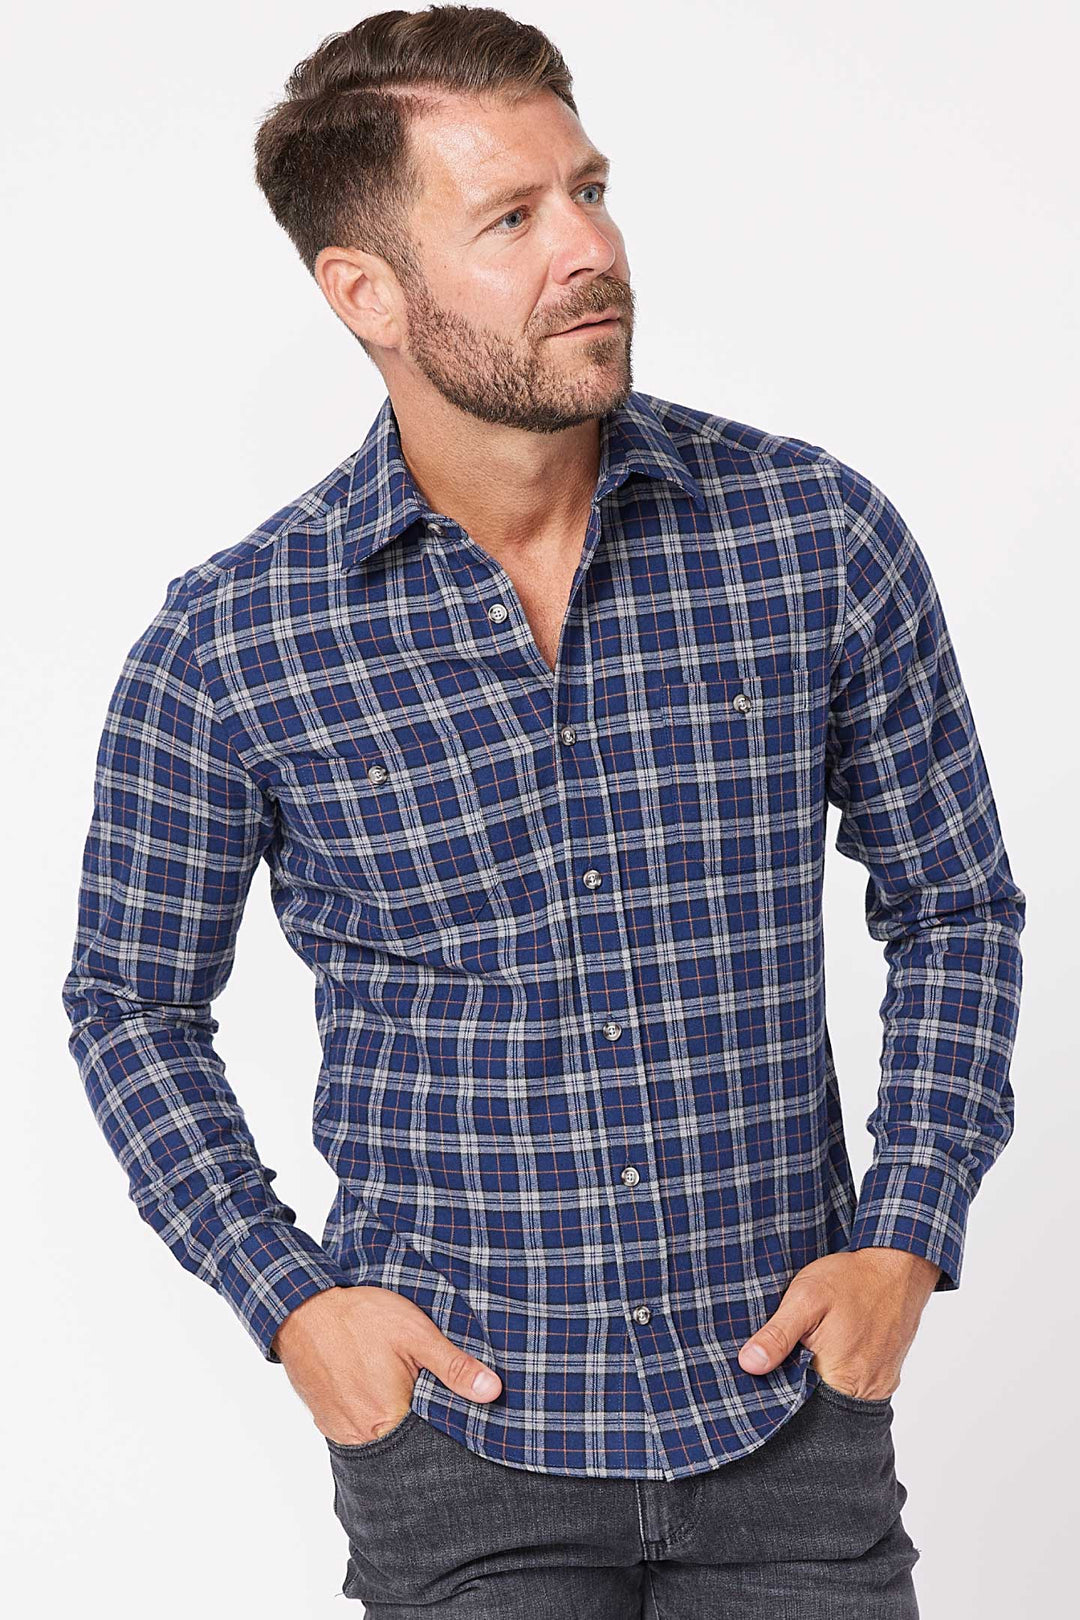 Buy Ozark Plaid Flannel Button-Down Shirt for Short Men | Ash & Erie   Flannel Everyday Shirt